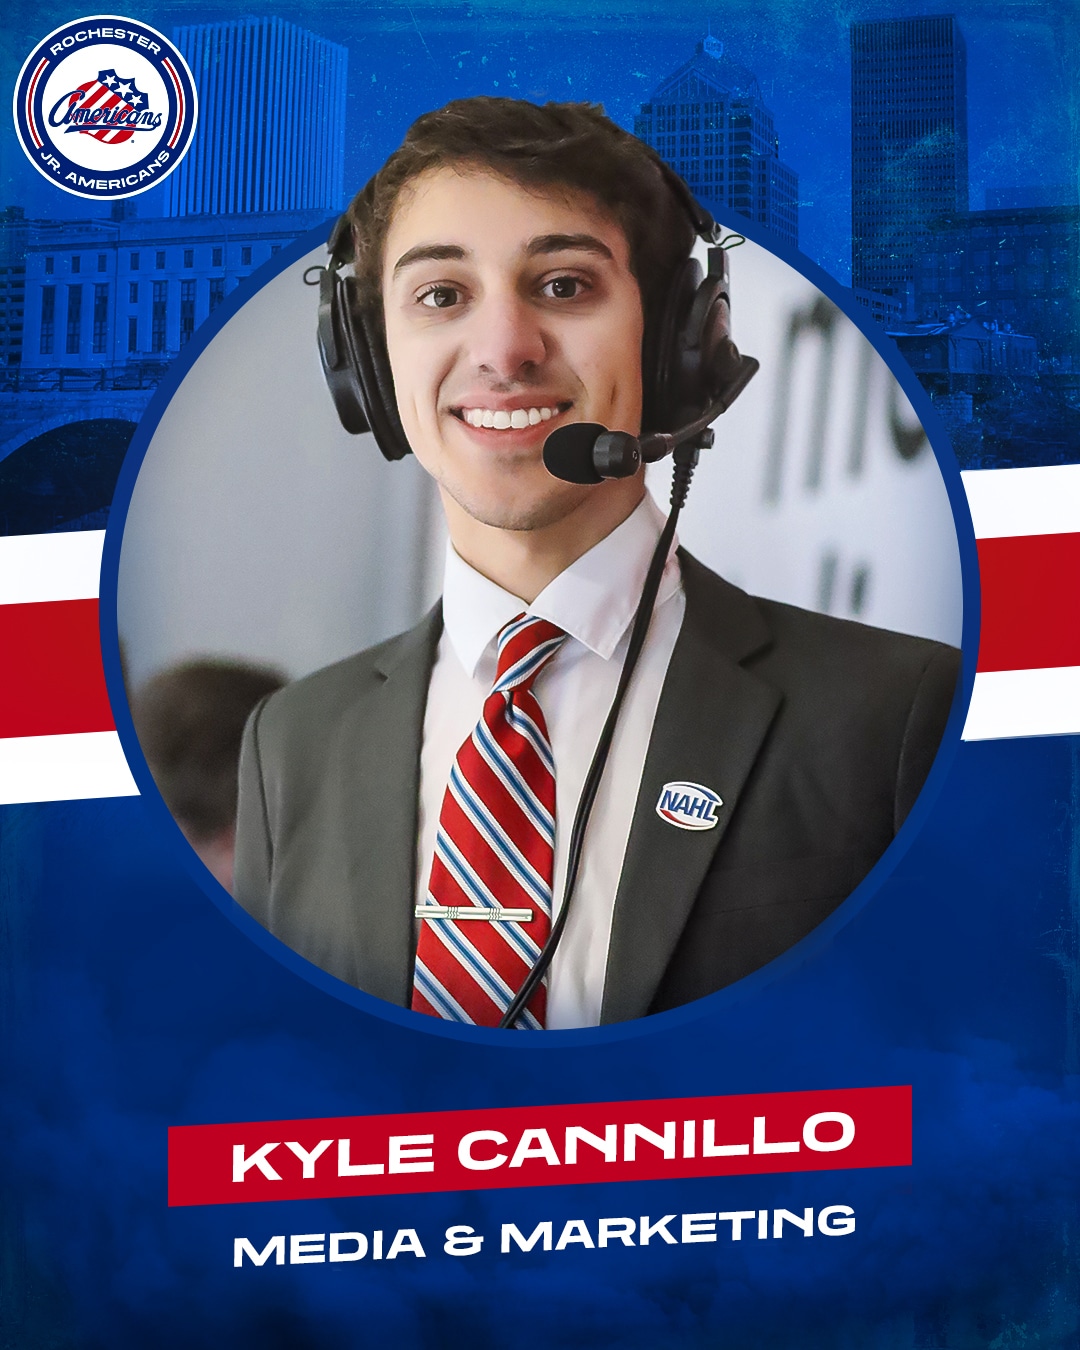 Kyle Cannillo